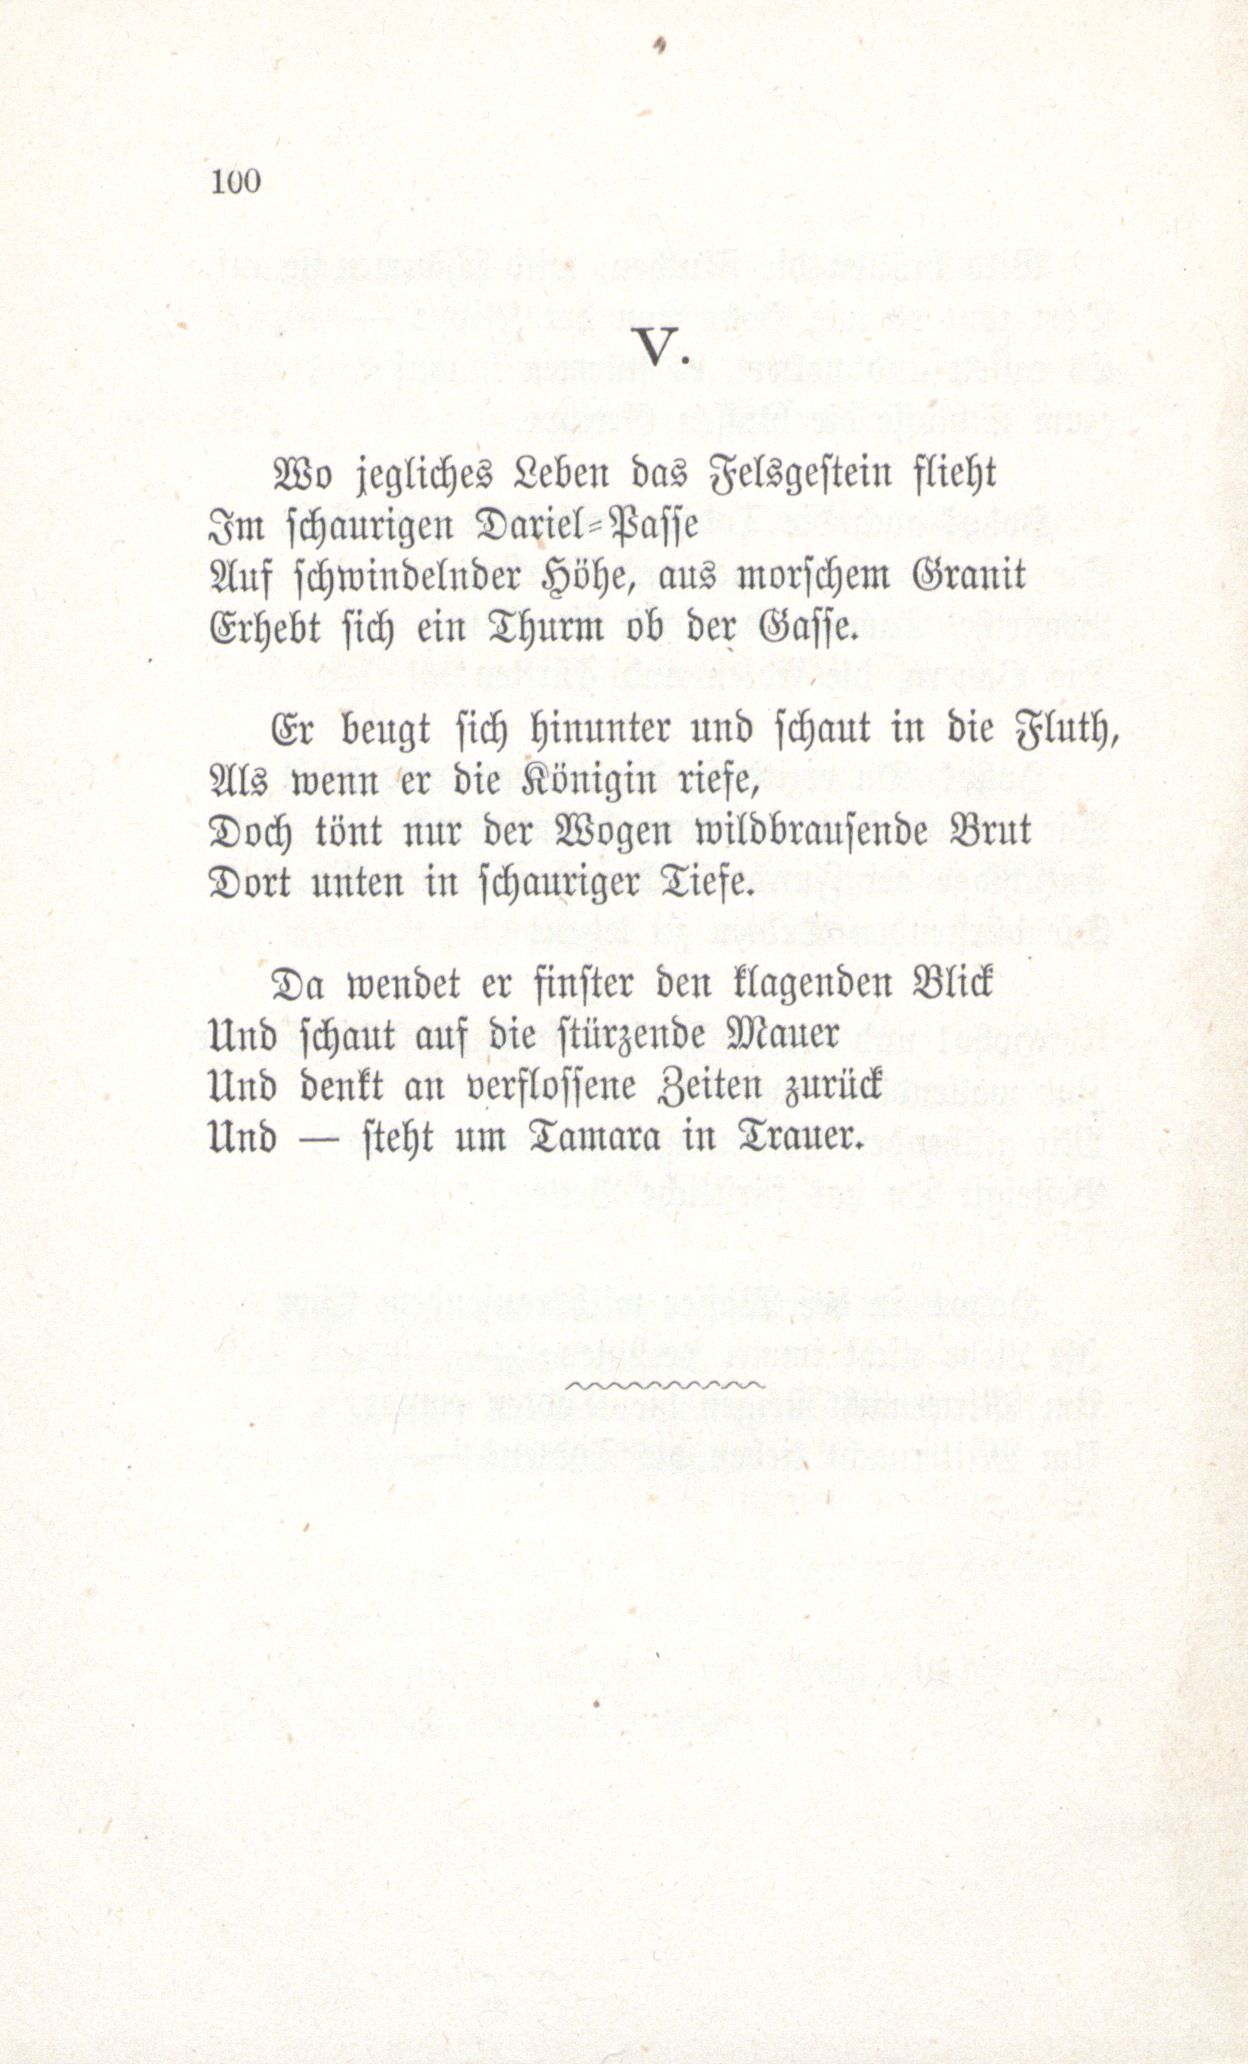 Erinnerung an die Fraternitas (1880) | 101. (100) Main body of text